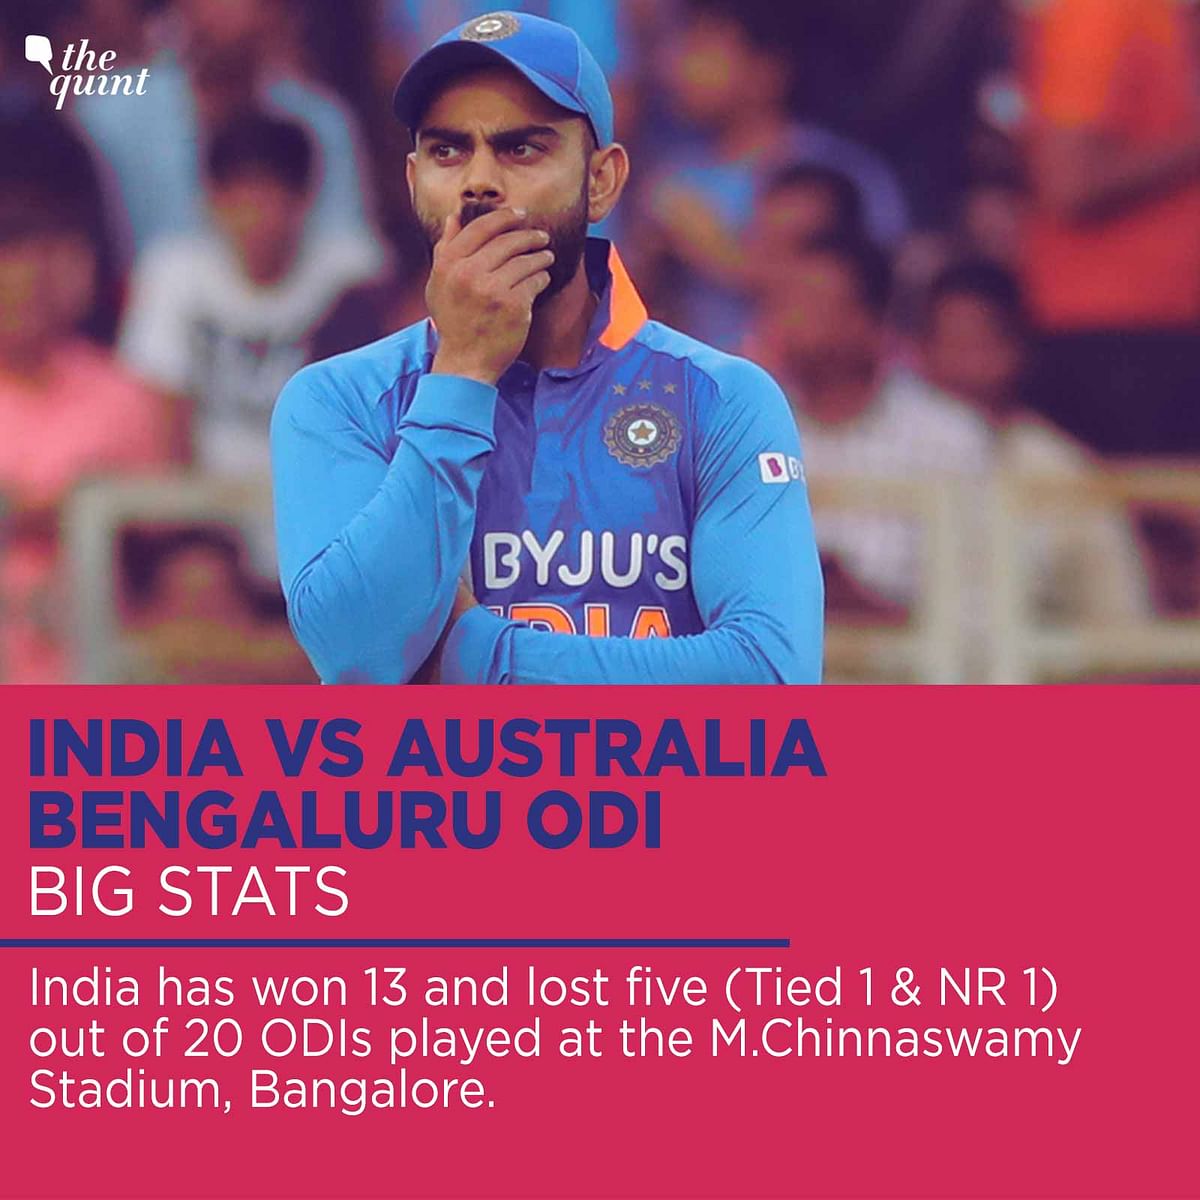 Stats: Rohit Sharma scored his first double century at the Bengaluru stadium.